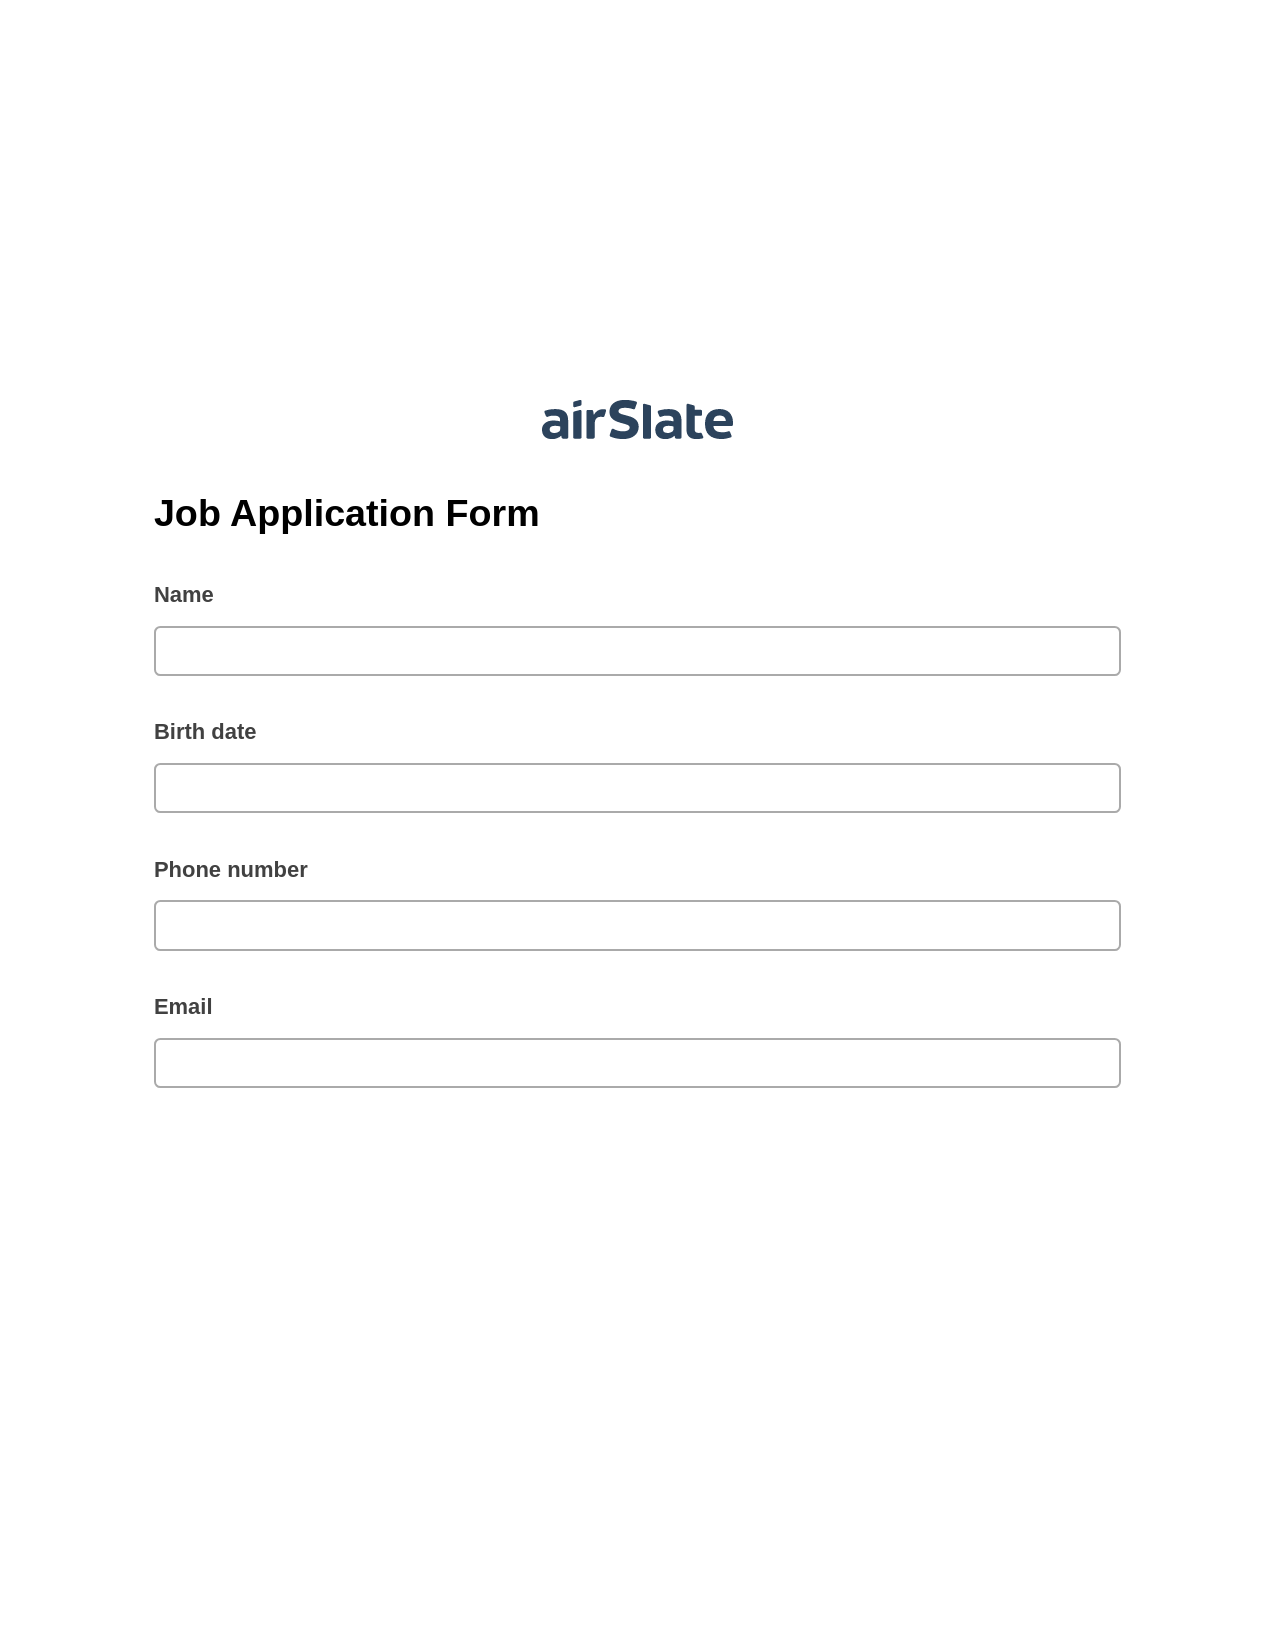 Multirole Job Application Form System Bot - Slack Two-Way Binding Bot, Create Slate Reminder Bot, Archive to SharePoint Folder Bot